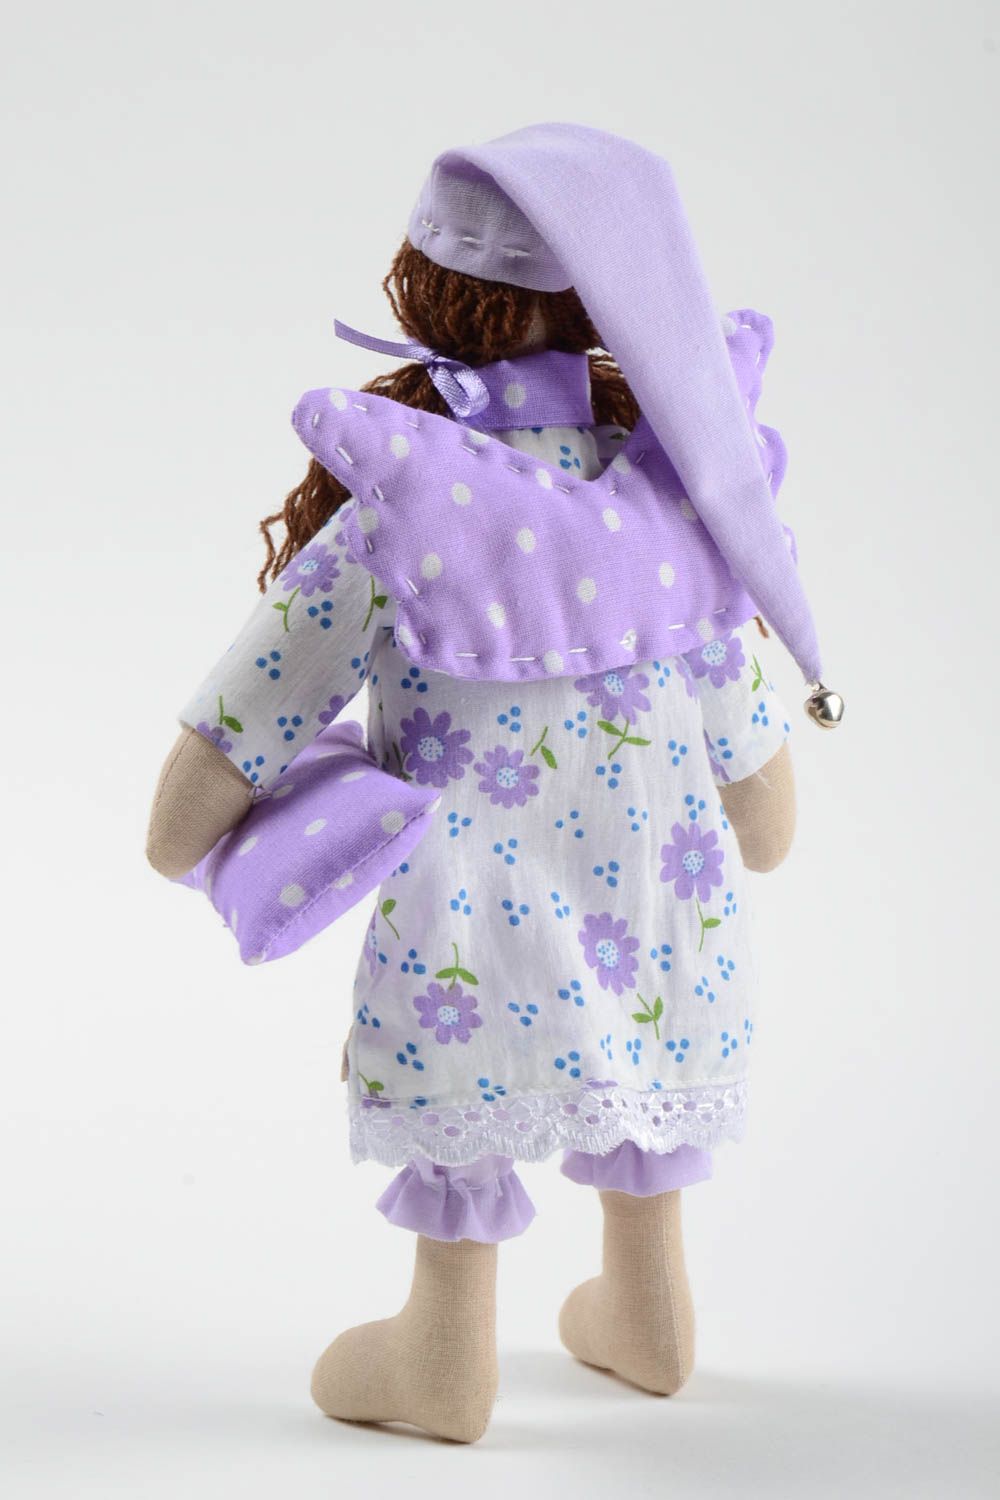 Beautiful handmade rag doll soft toy designs interior design ideas gift ideas photo 4